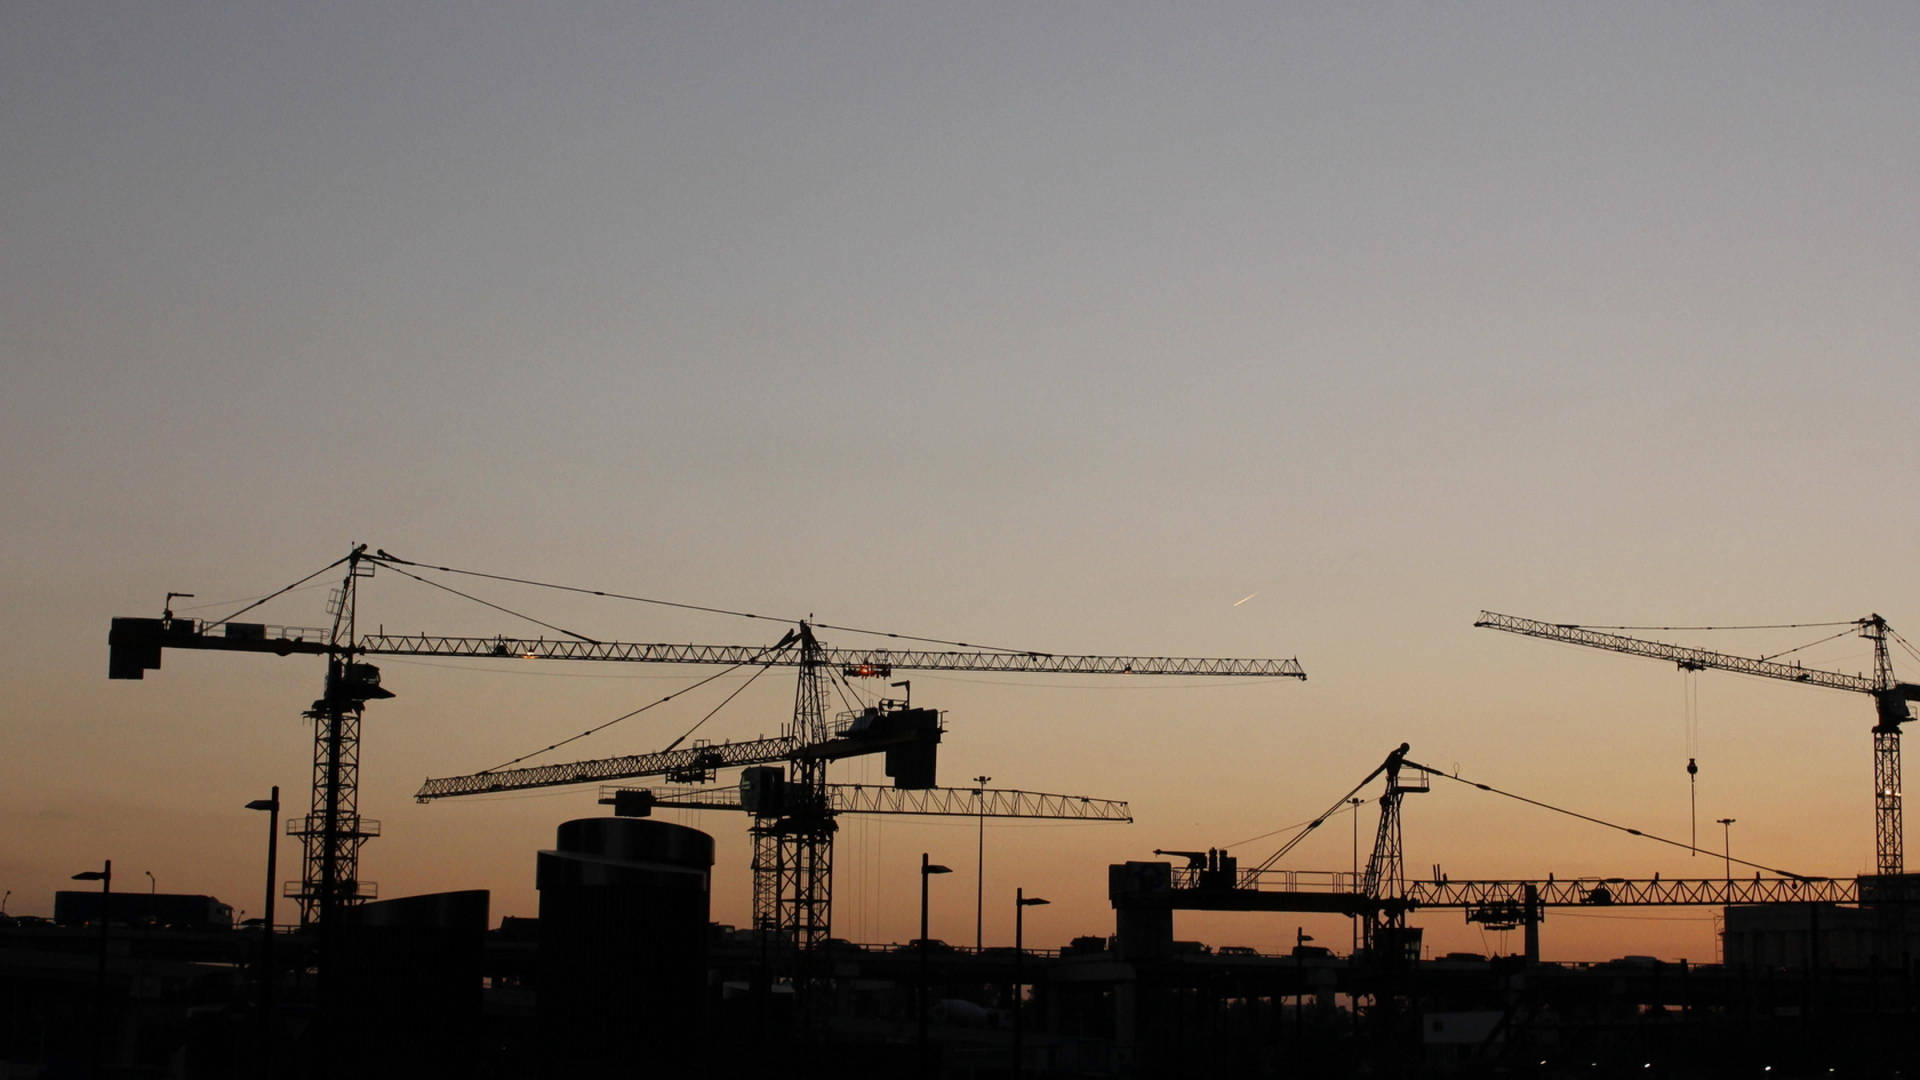 Construction Cranes For Civil Engineering